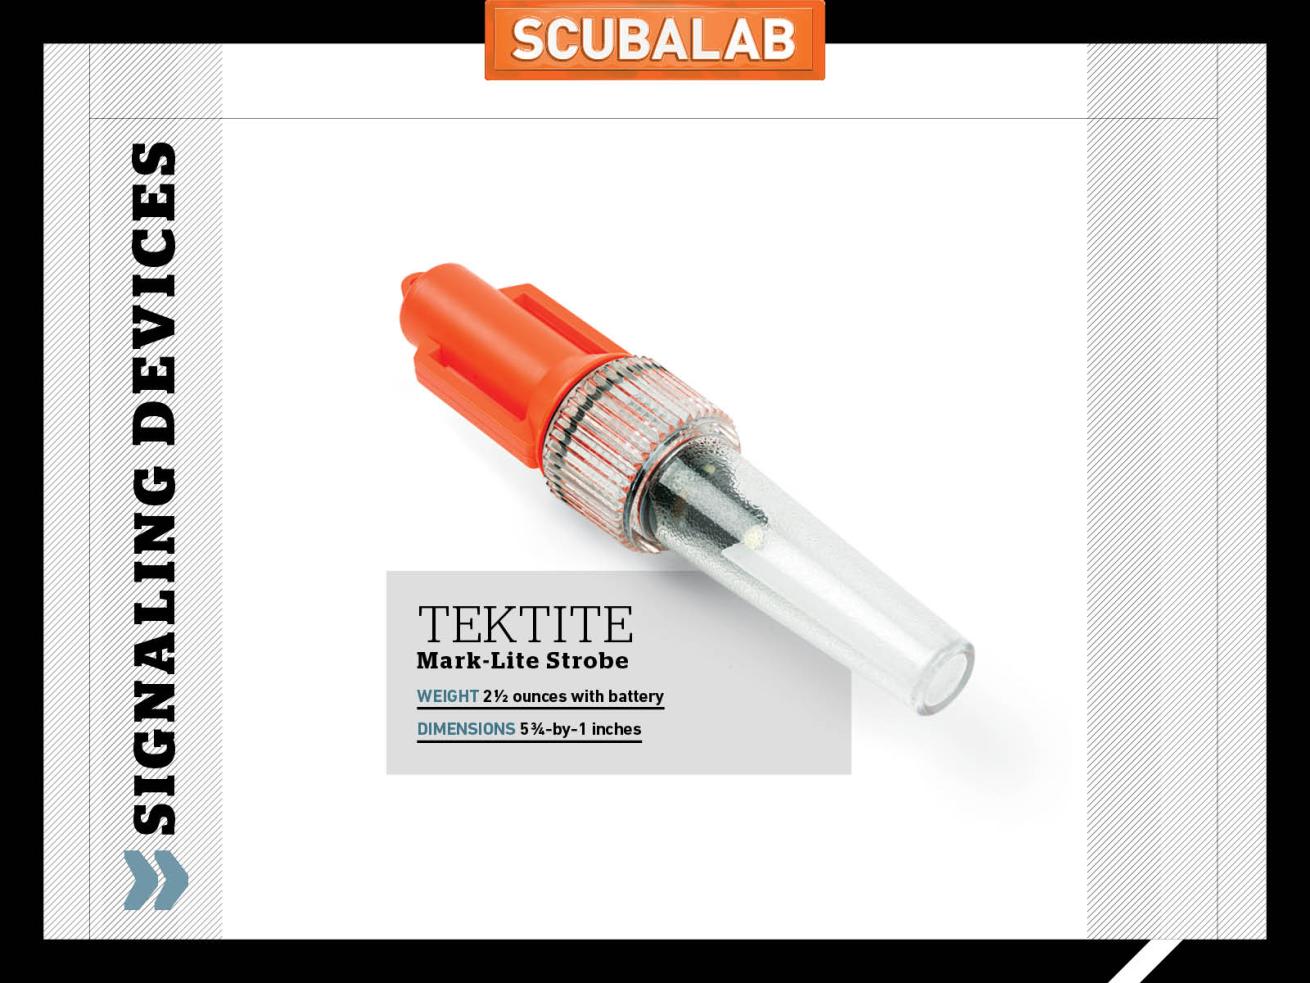 ScubaLab emergency signaling gear Tektite Mark-Lite strobe flash